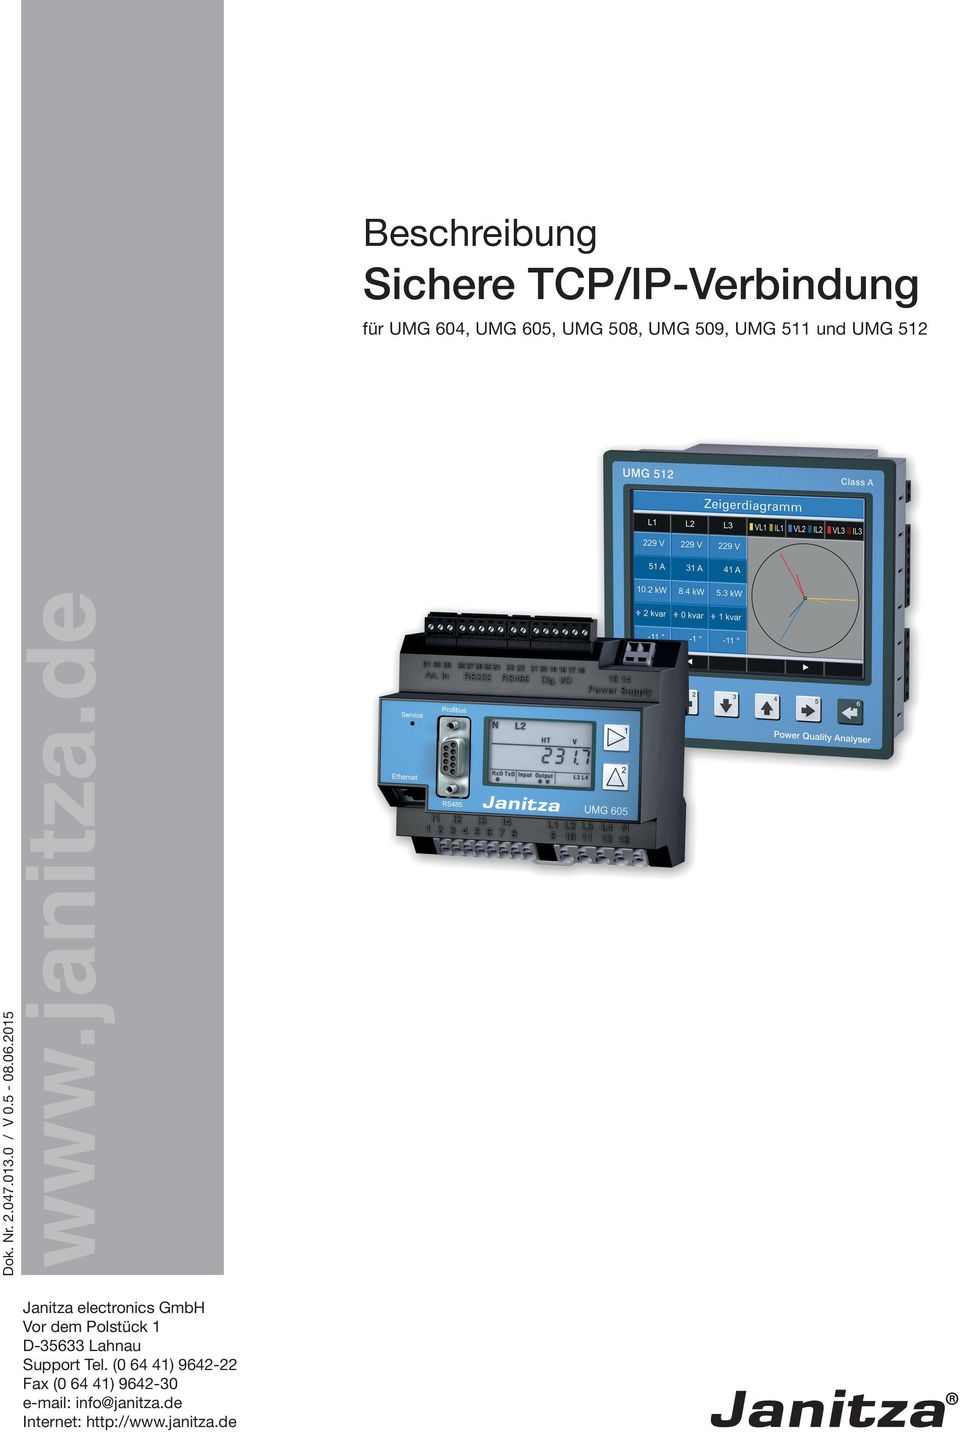 de Janitza electronics GmbH Vor dem Polstück 1 D-35633 Lahnau Support Tel.